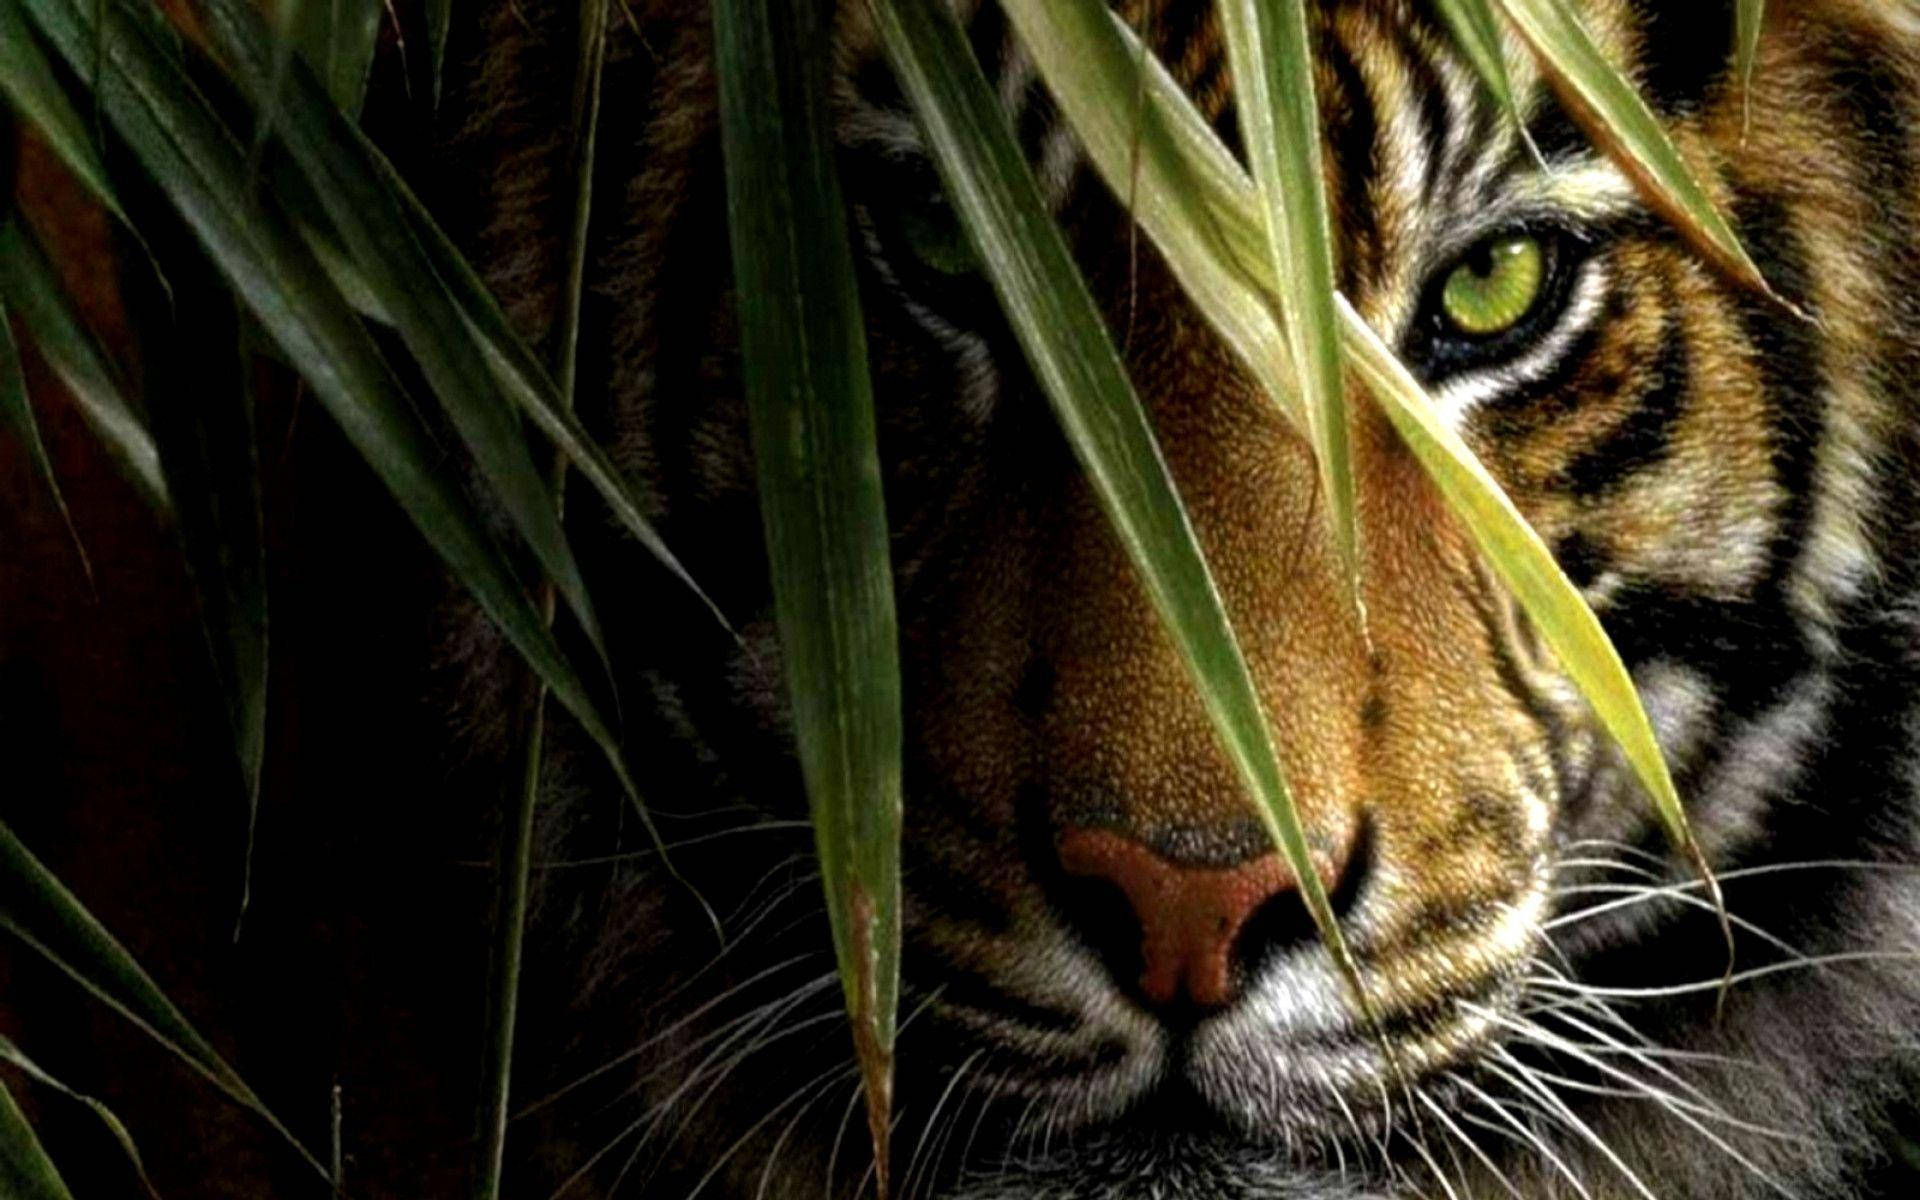 Tiger taking a break in the jungle. Wallpaper